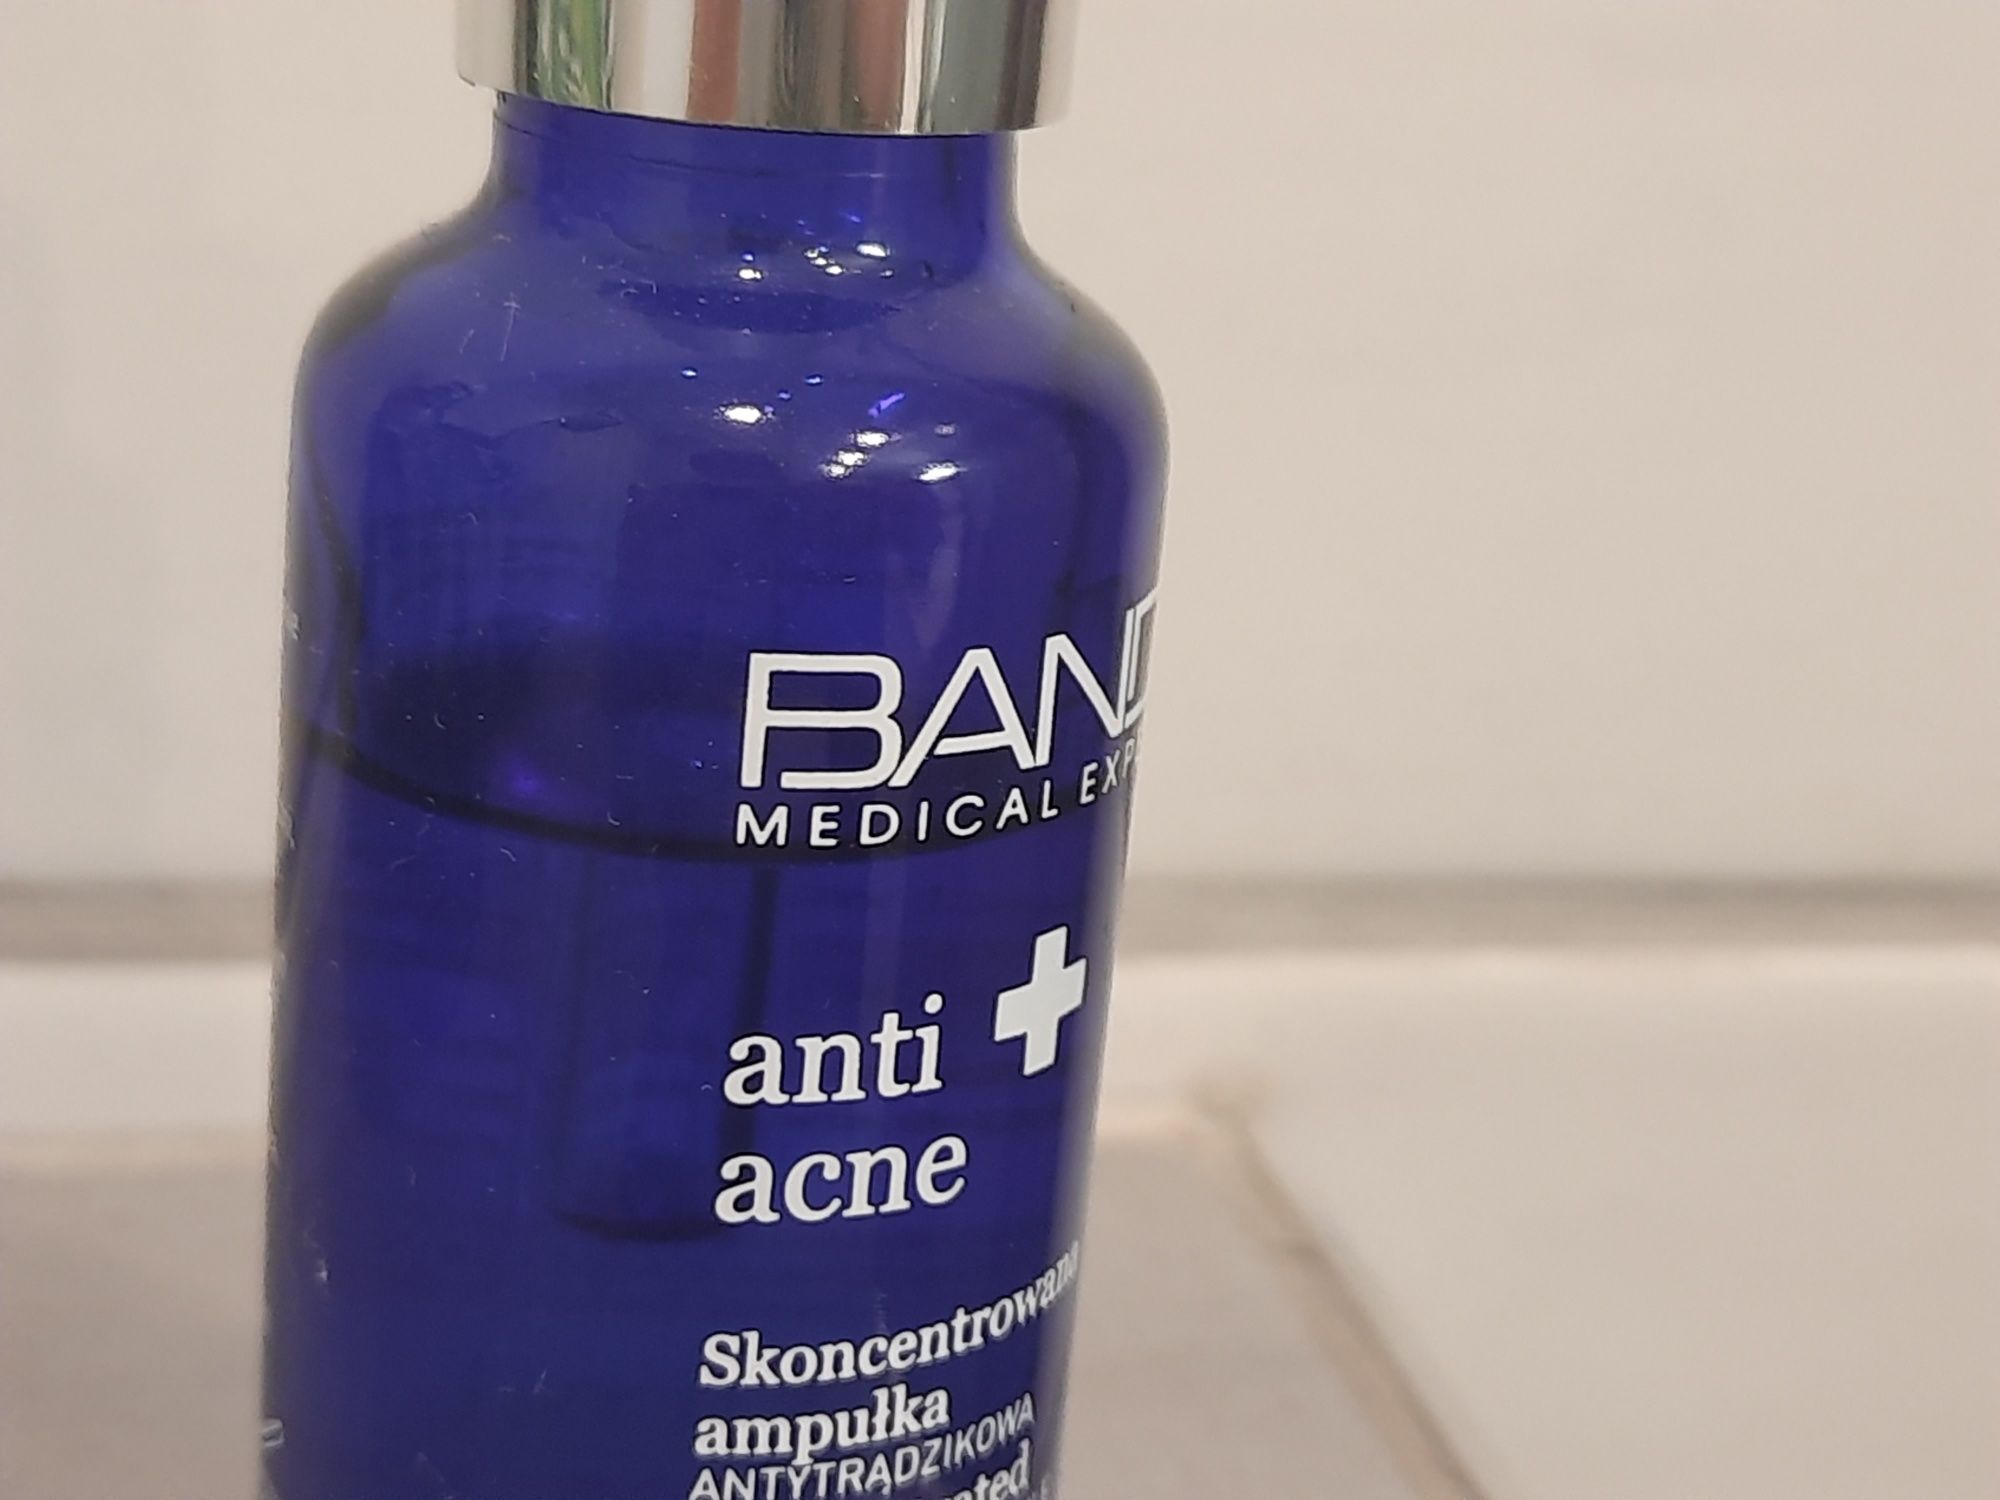 Bandi anti acne serum